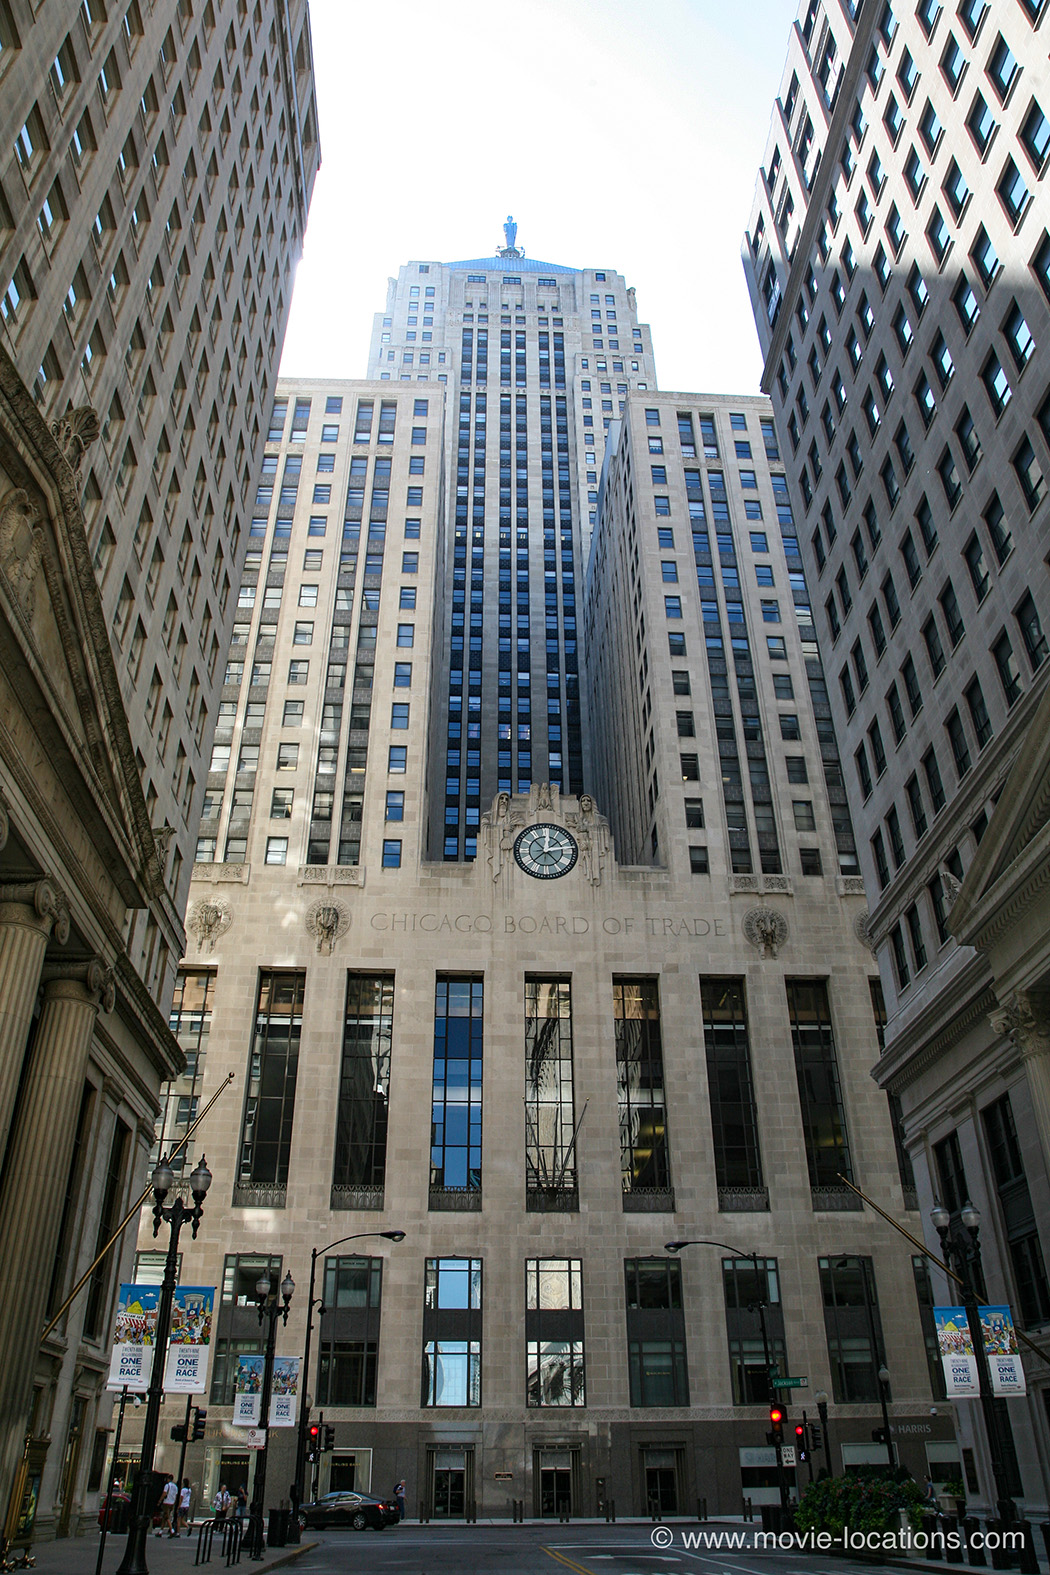 Batman Begins film location: Chicago Board of Trade Building, 141 West Jackson Boulevard, Chicago